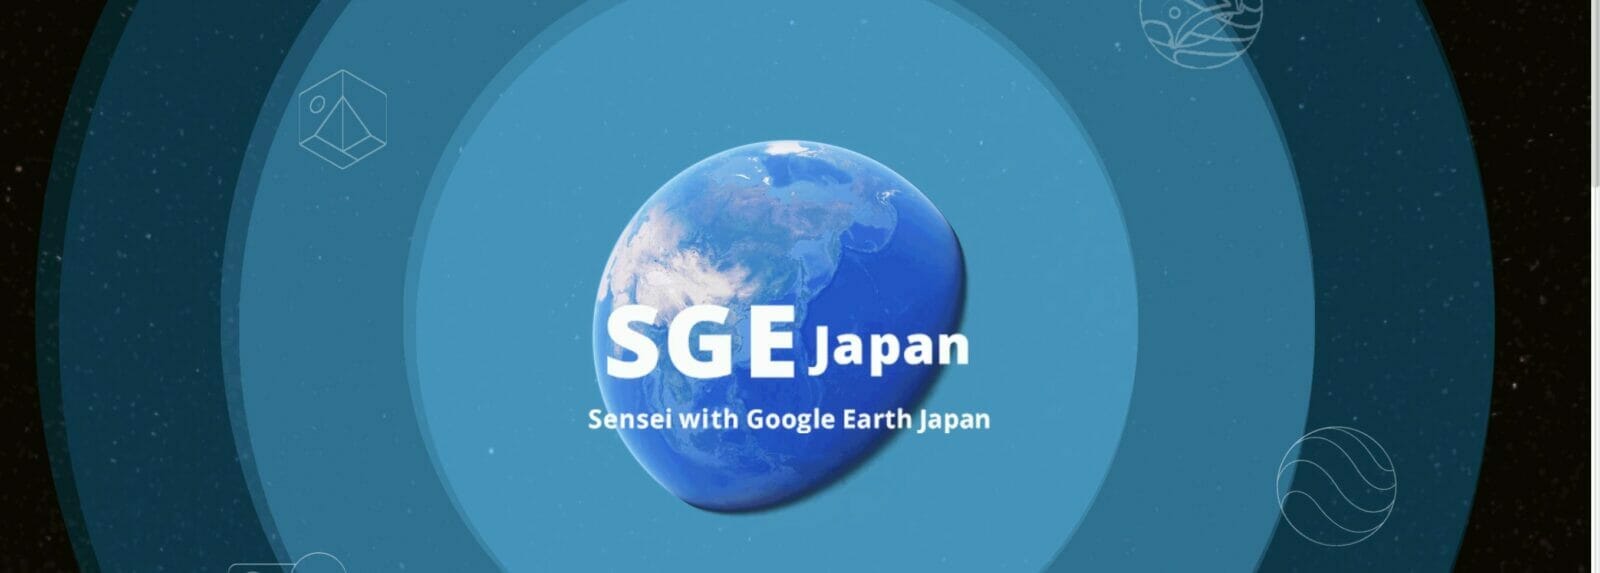 SGE Japan